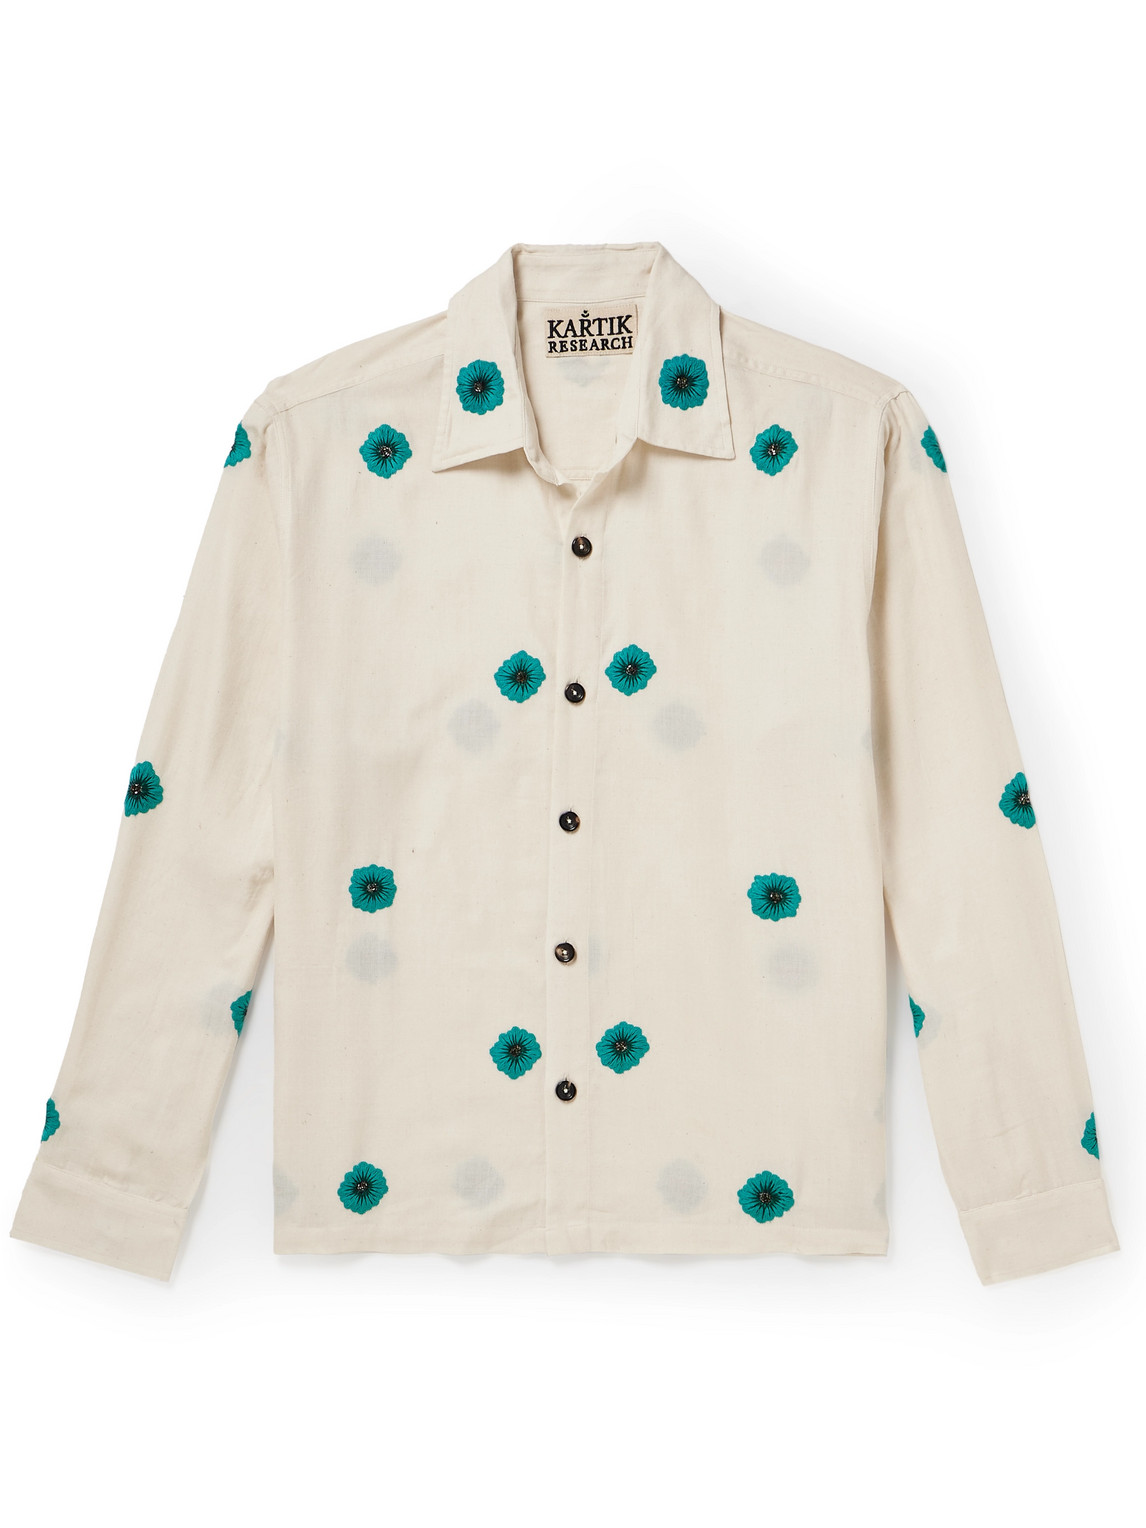 Kartik Research - Camp-Collar Embellished Embroidered Cotton-Jacquard Shirt - Men - Neutrals - S von Kartik Research